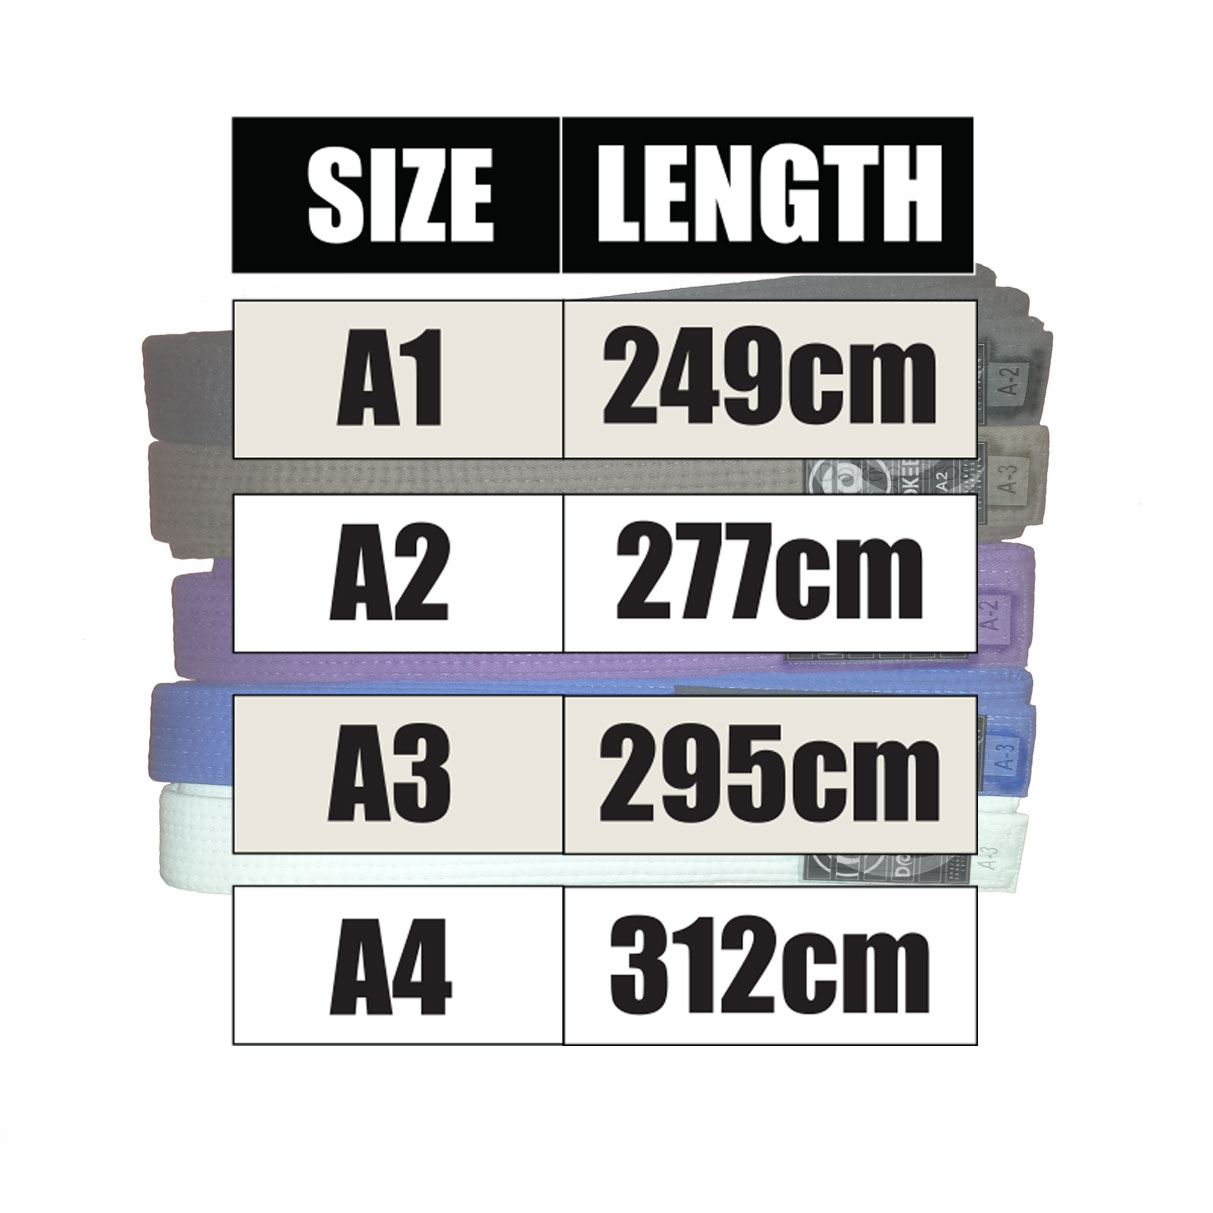 Bjj Belt Size Chart